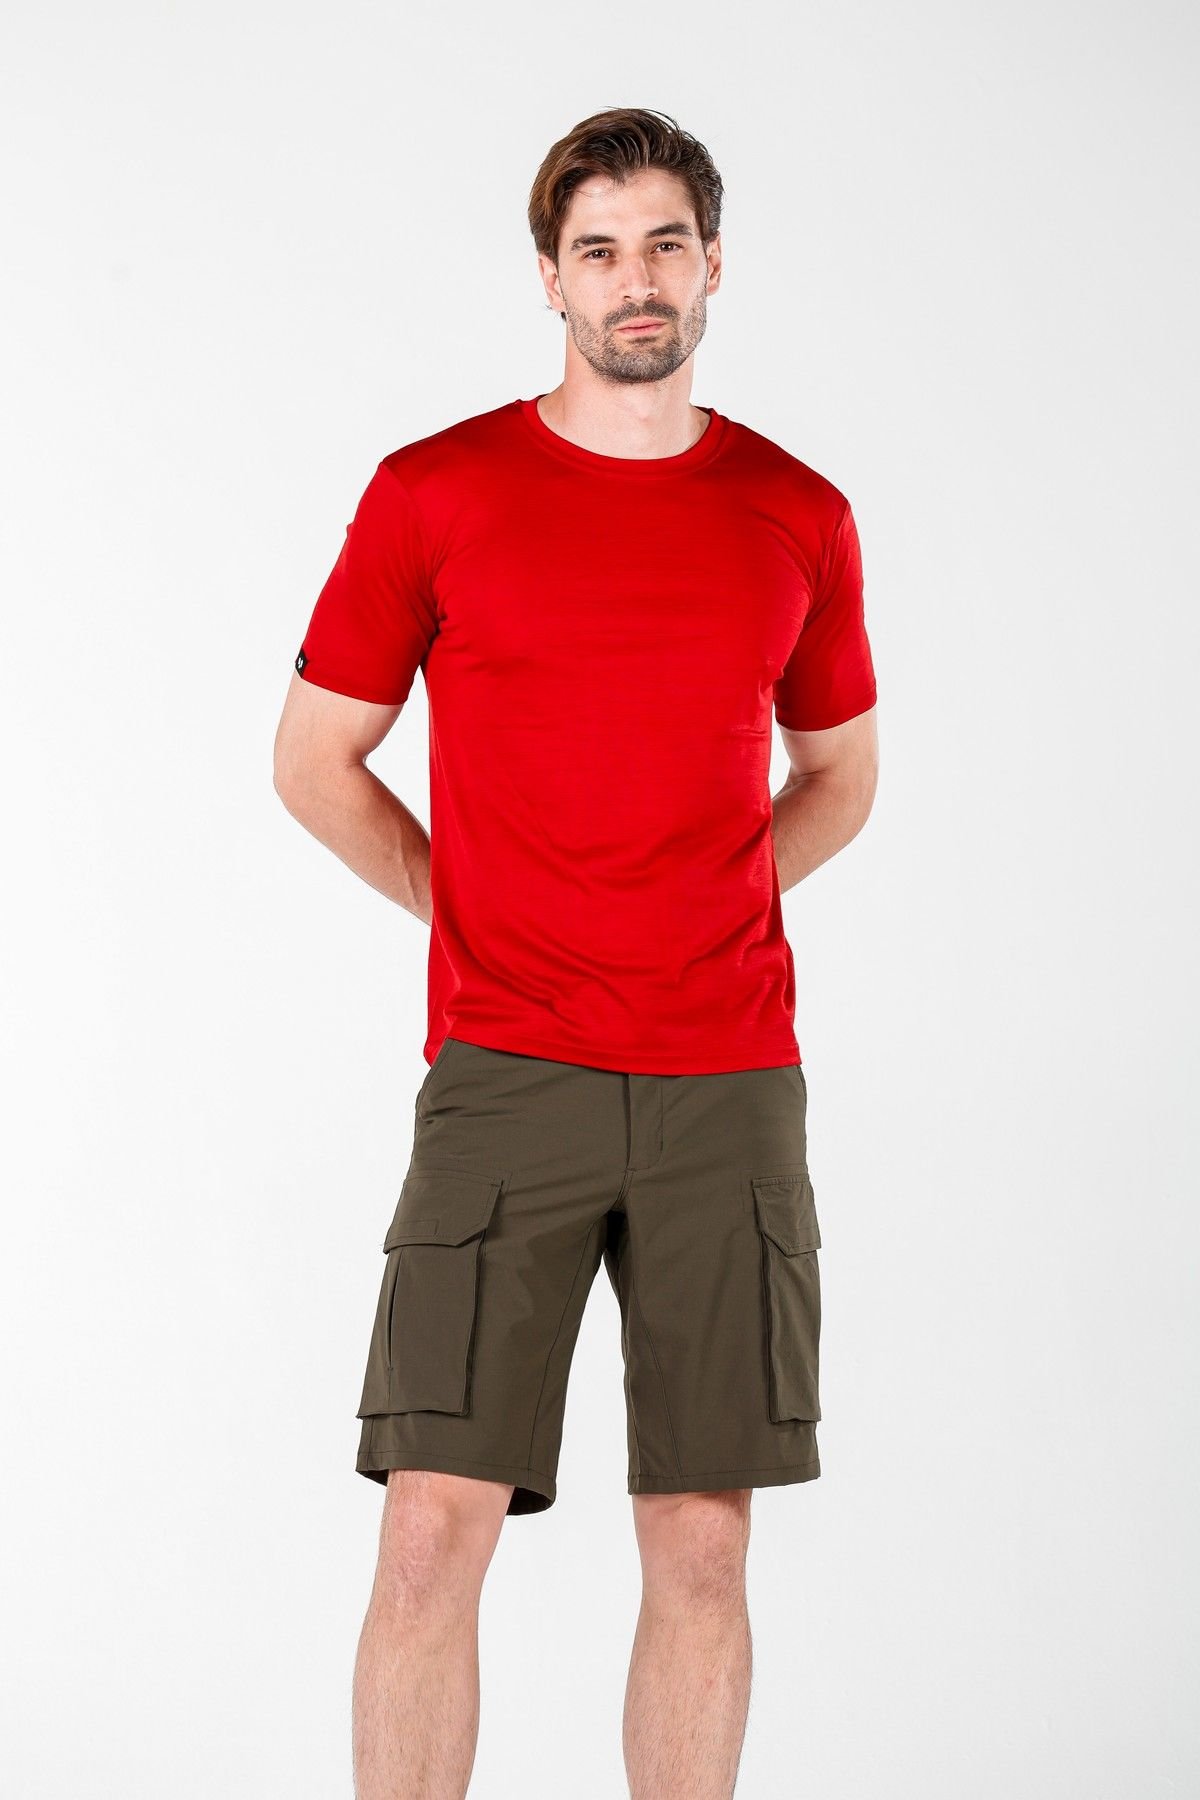 Woolona 100% Merinos Yün NOTUS Kırmızı T-Shirt